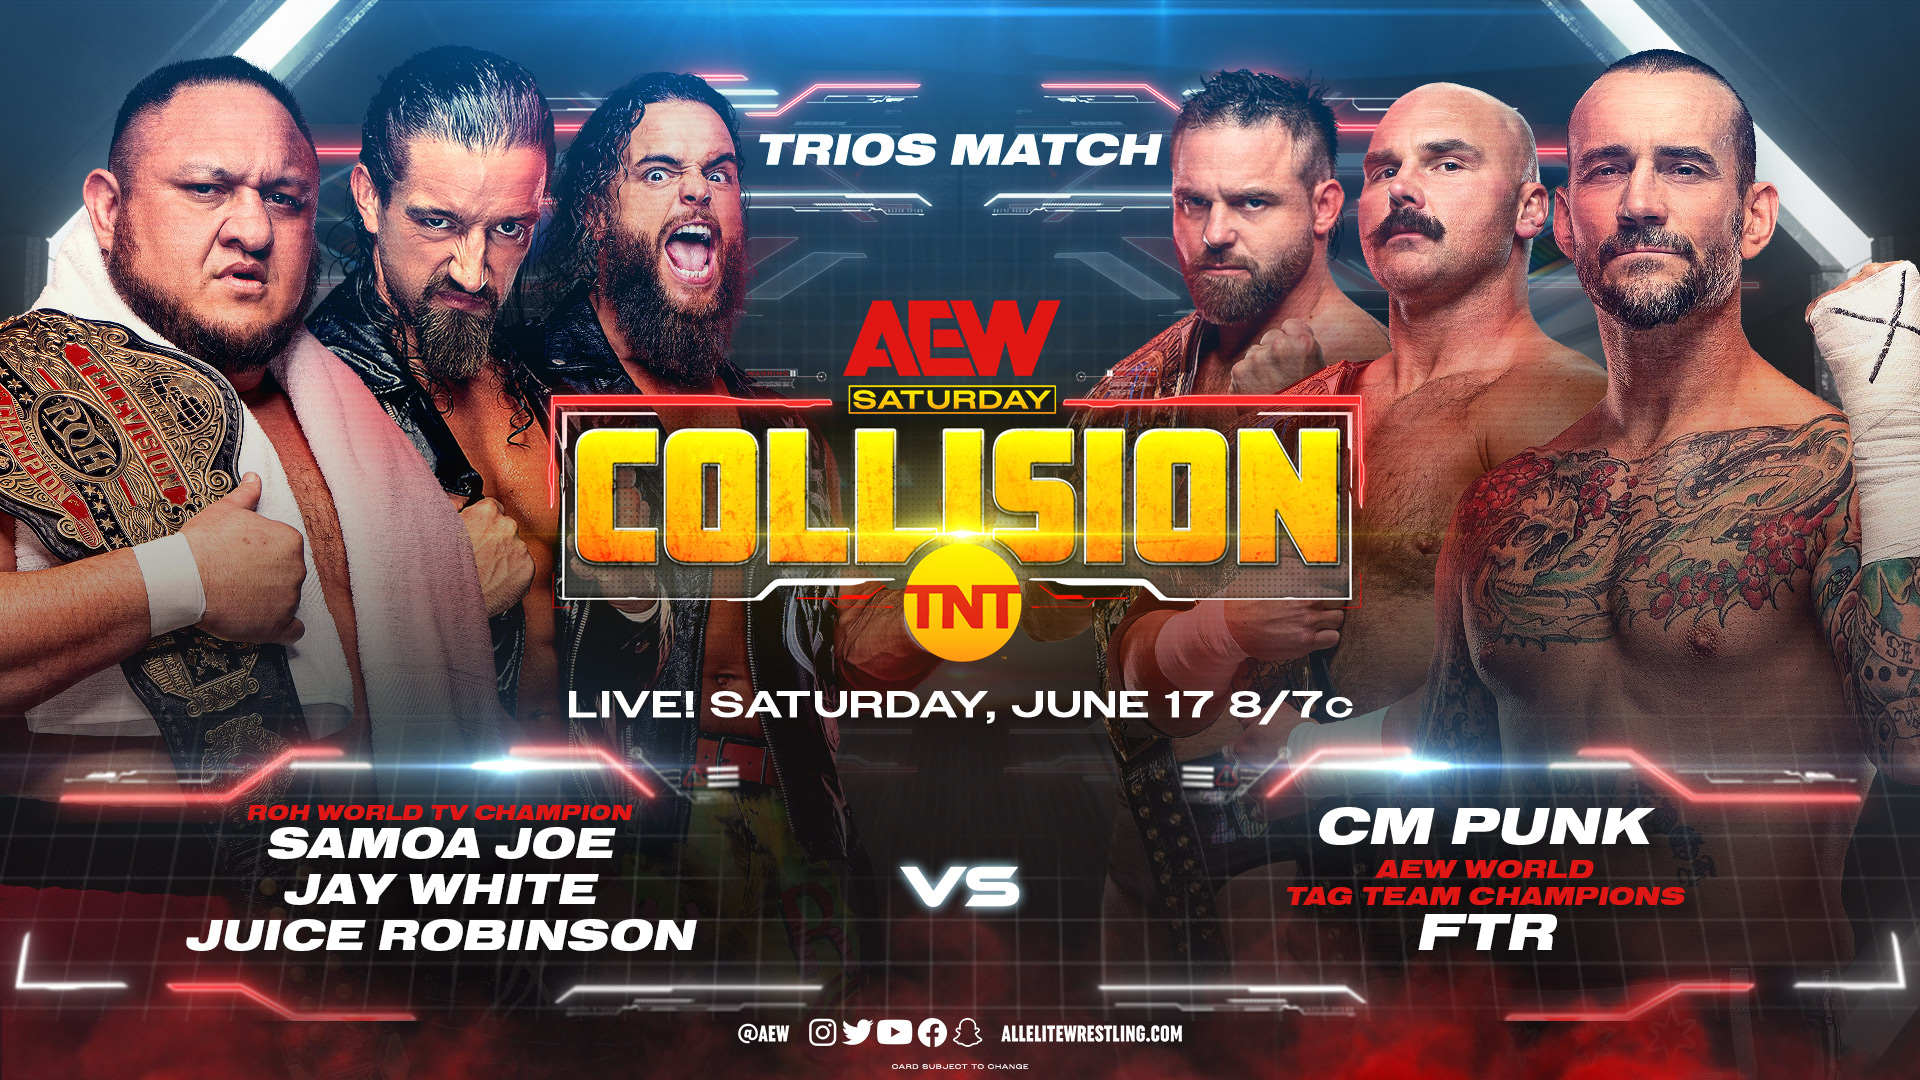 CM Punk FTR vs Samoa Joe Jay White Juice Robinson in a Six Man Tag Team match